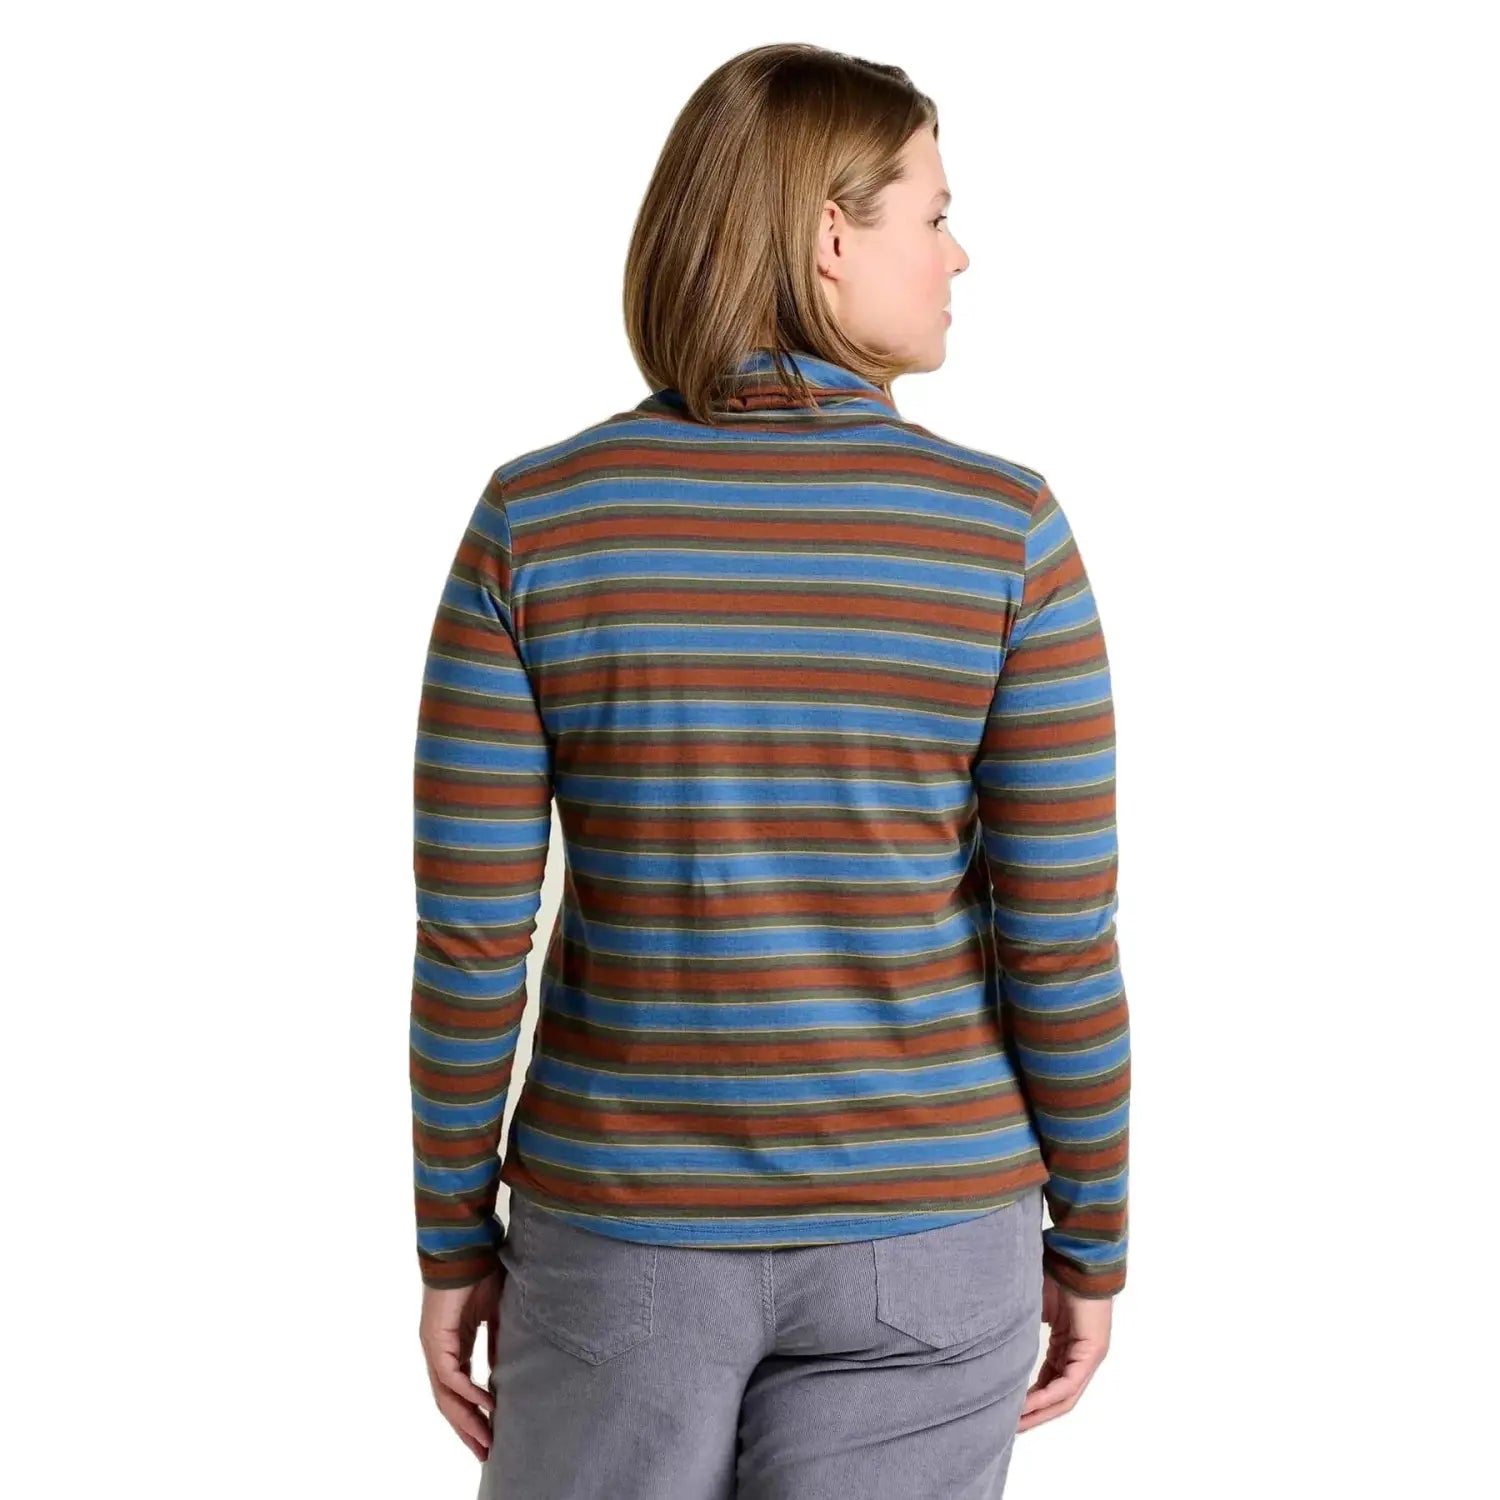 Toad & Co W's Maisey Long Sleeve T-Neck, Cornflower Stripe, back view on model